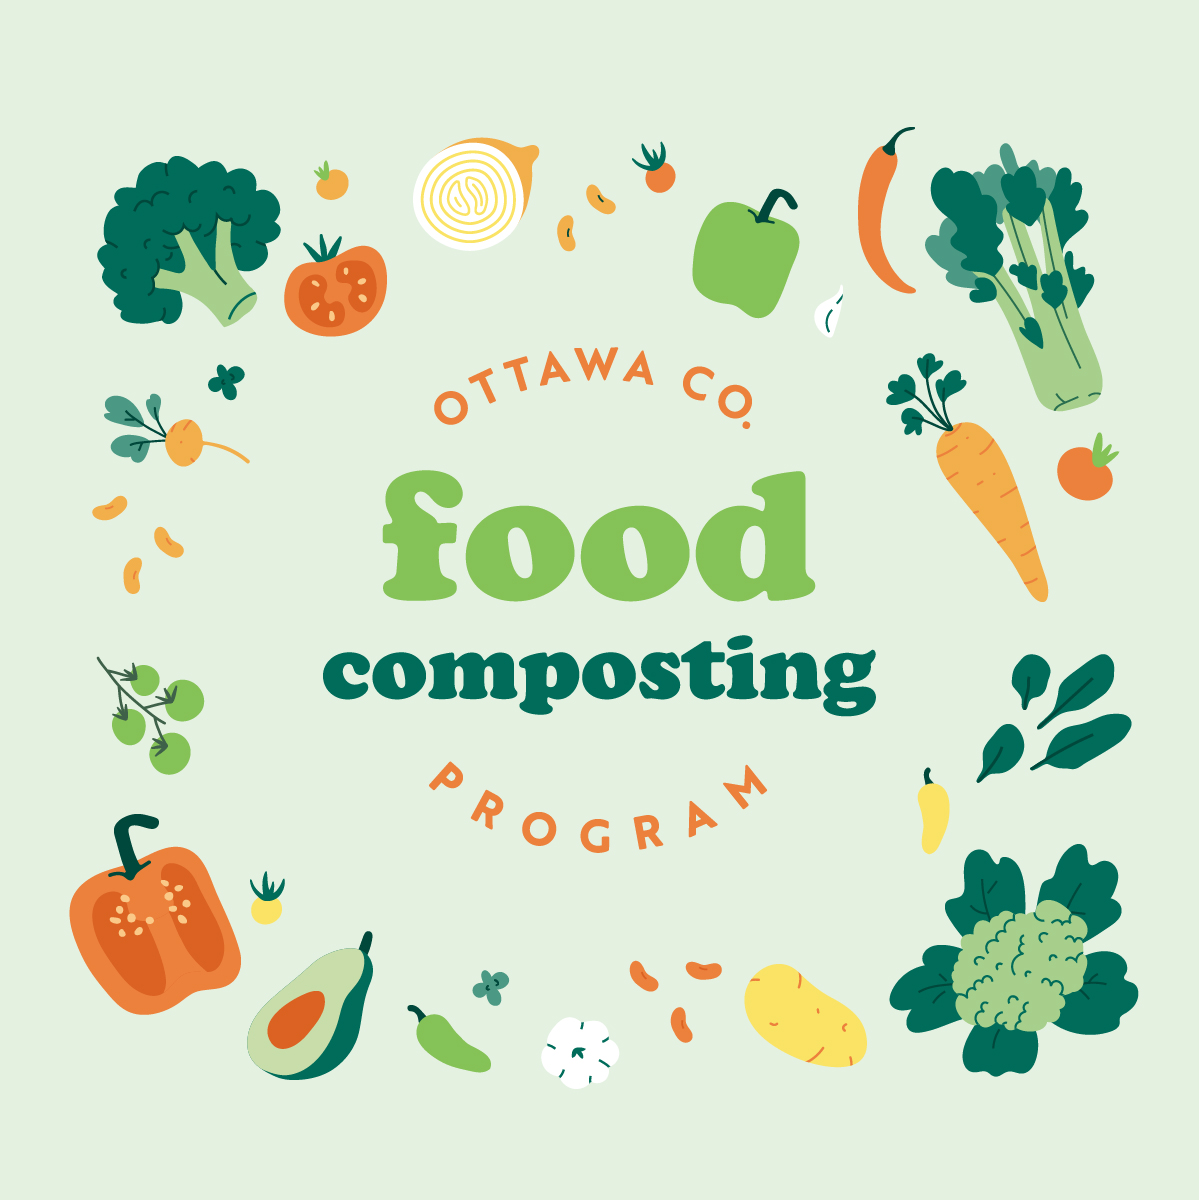 Ottawa County Food Composting Program